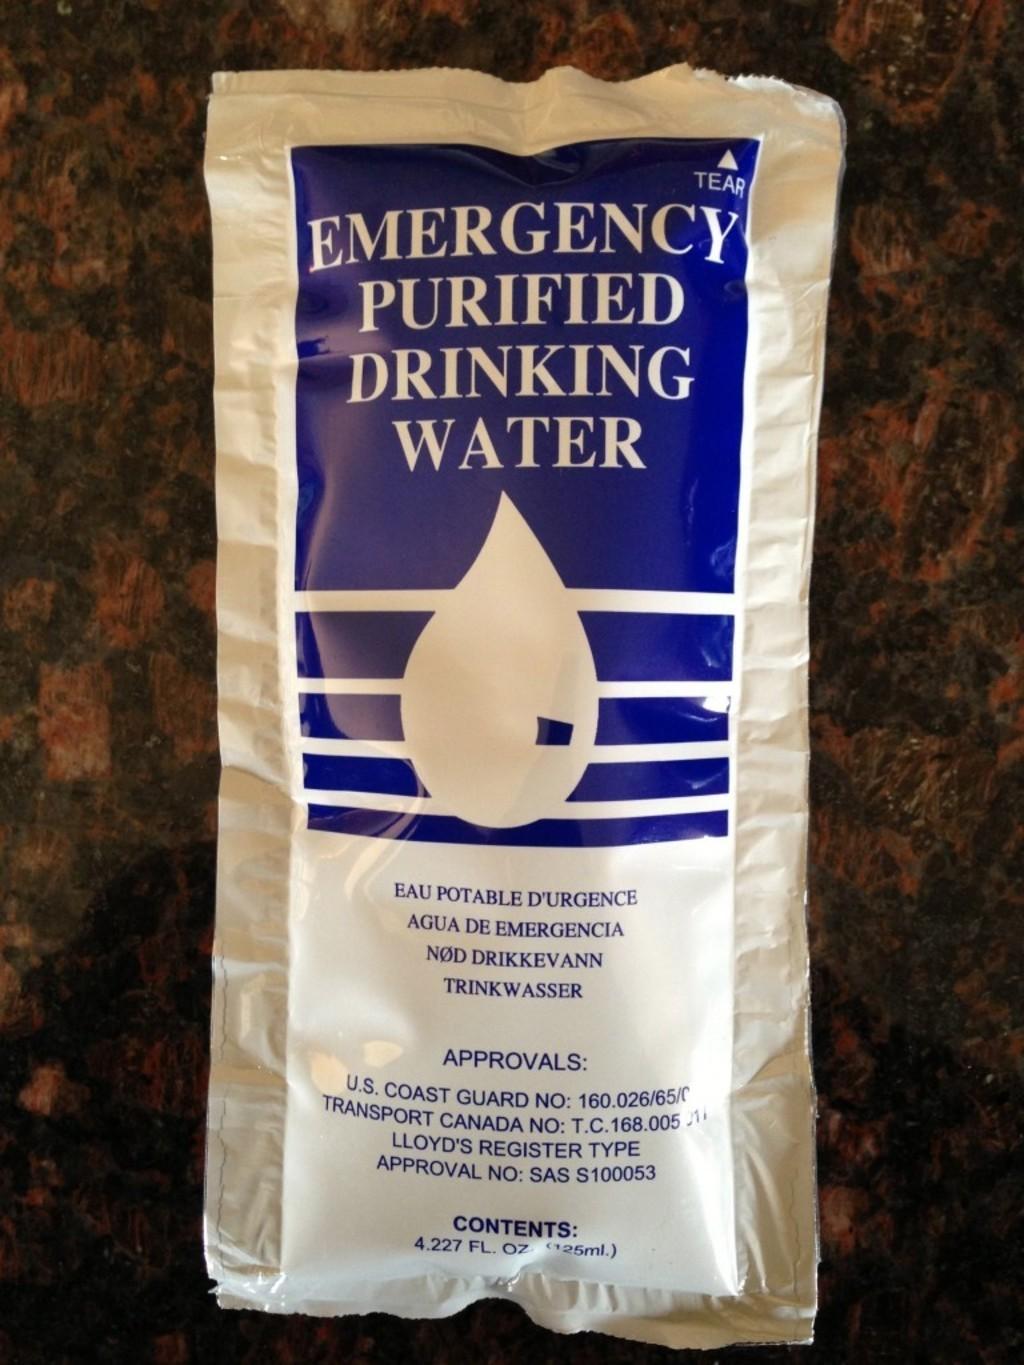 Emergency Water Supply